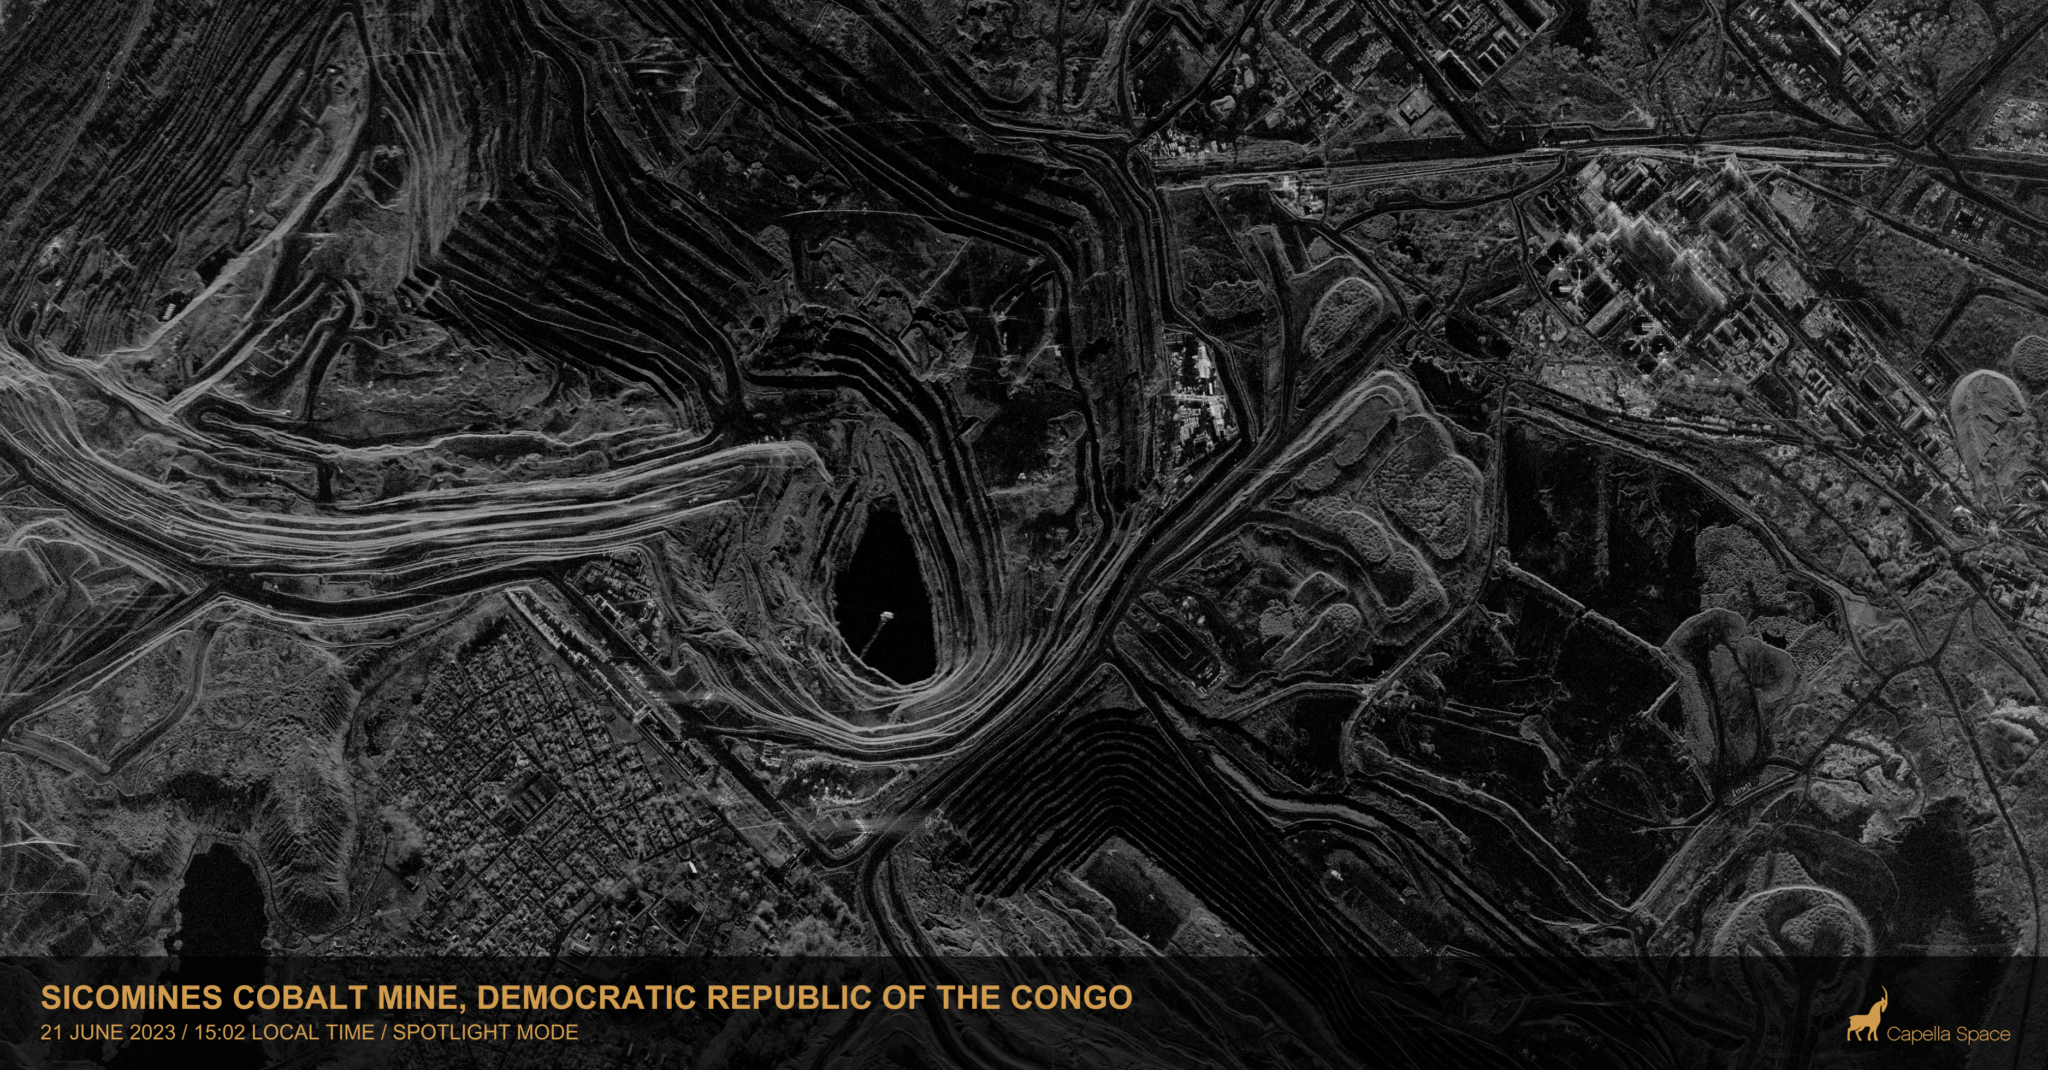 Sicomines Cobalt Mine, Democratic Republic of the Congo in SAR imagery